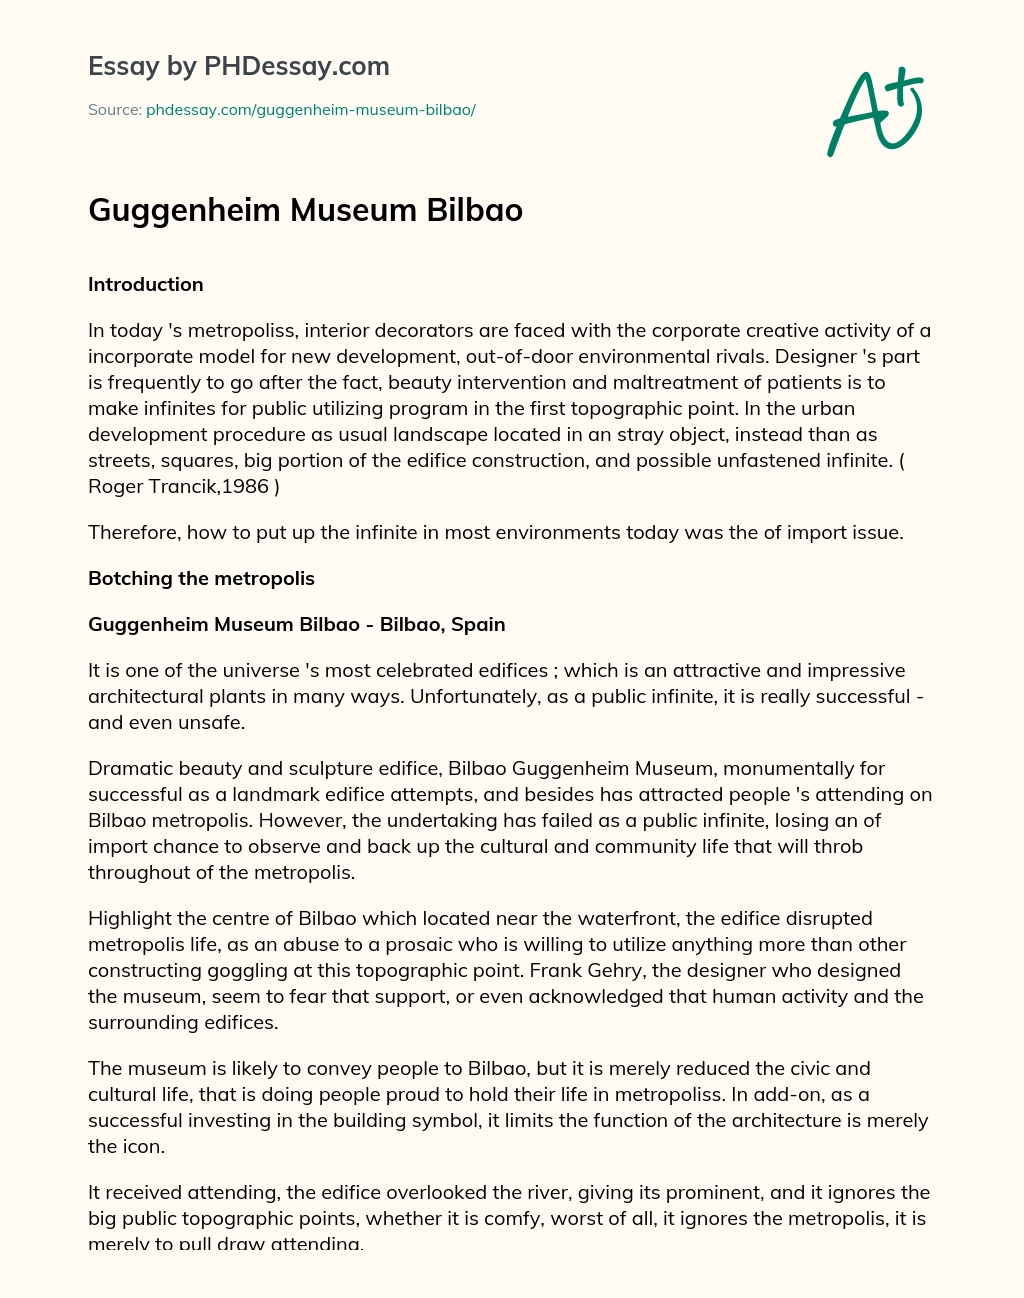 Guggenheim Museum Bilbao essay